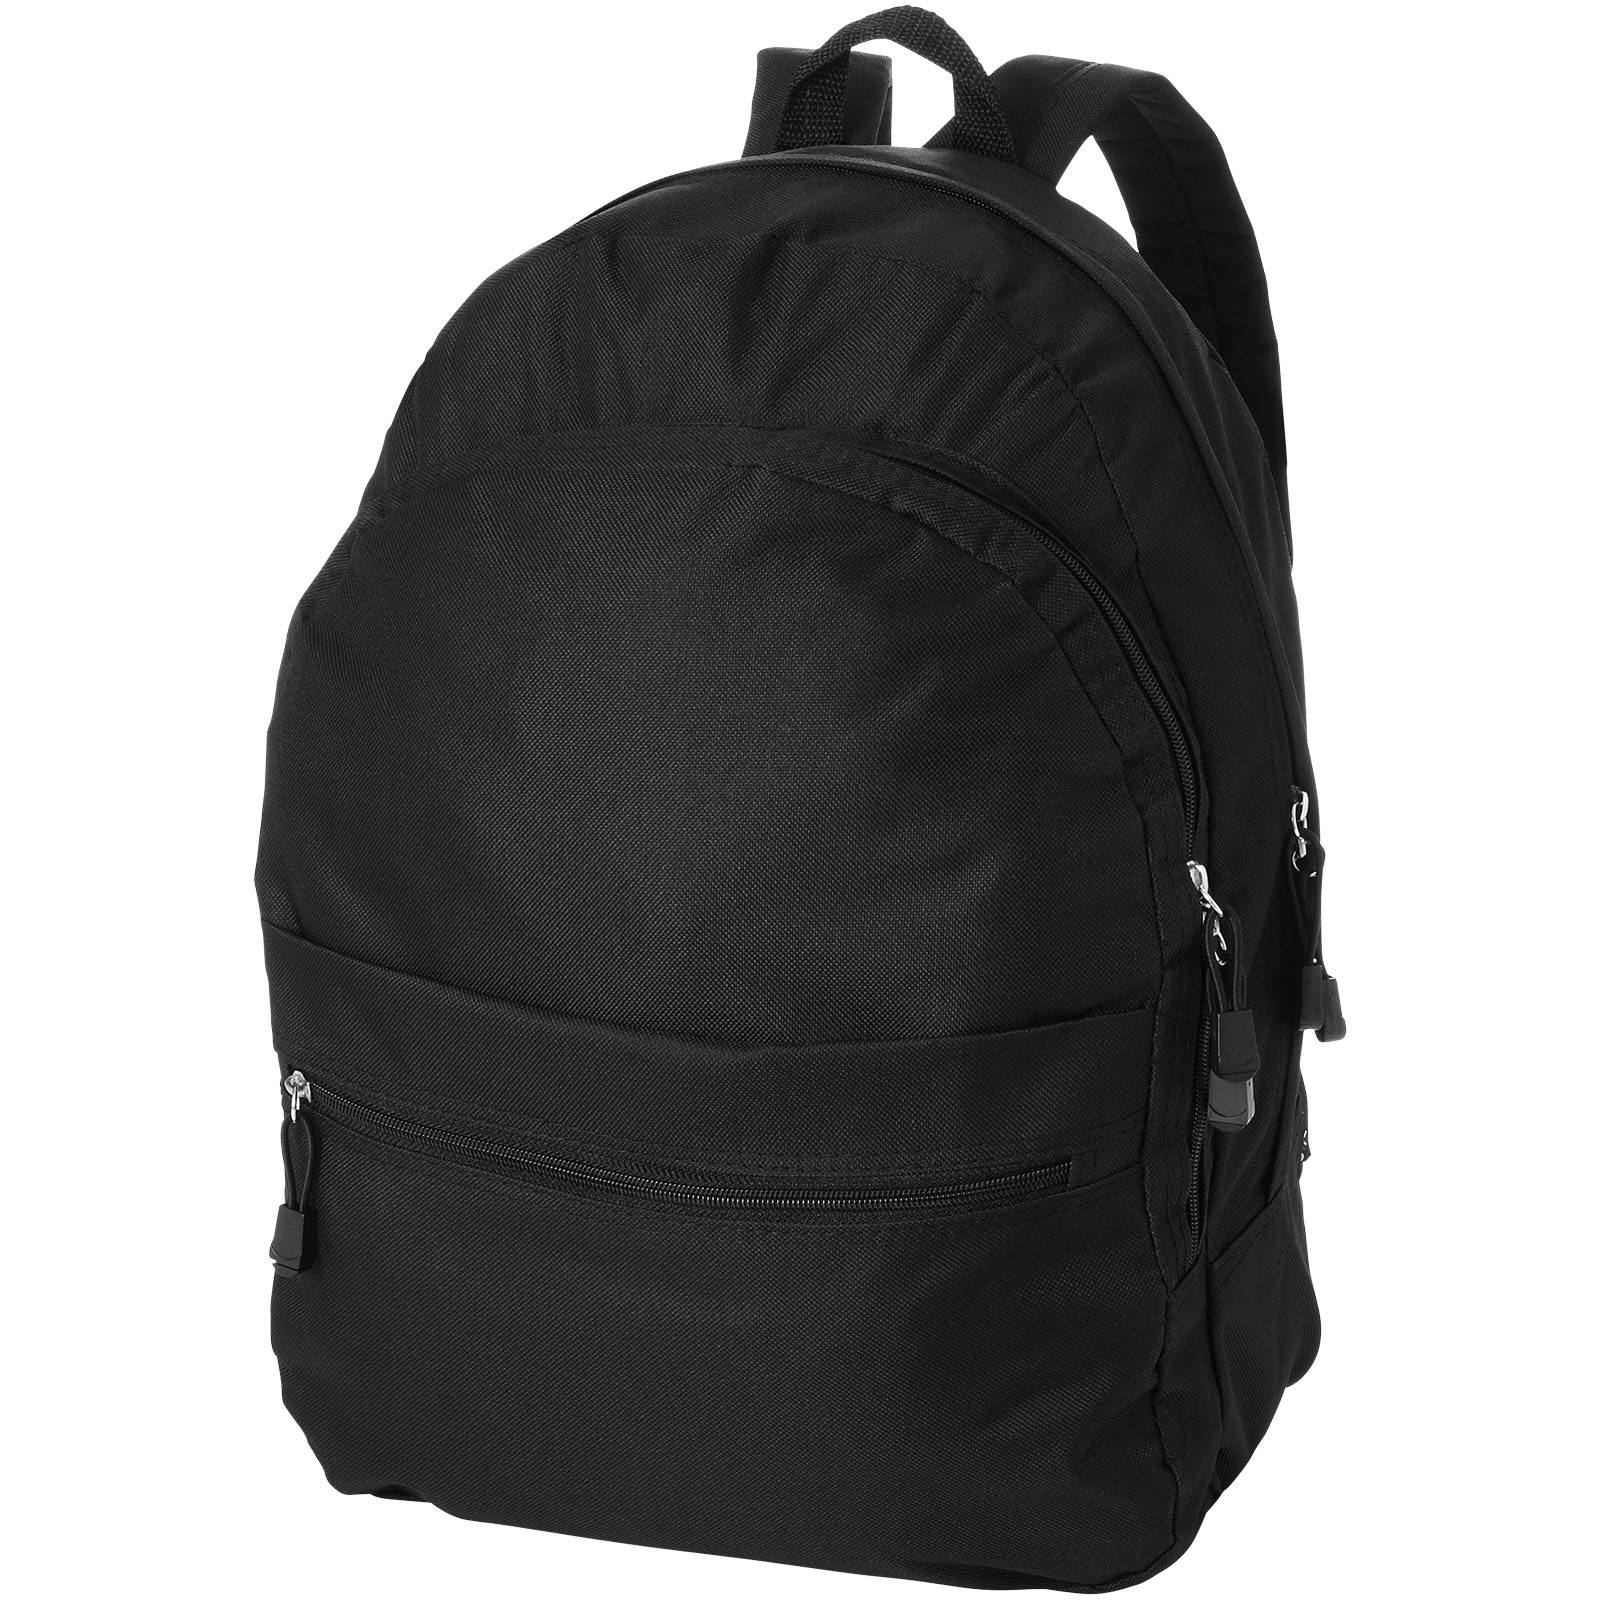 Trendy city backpack ELHI